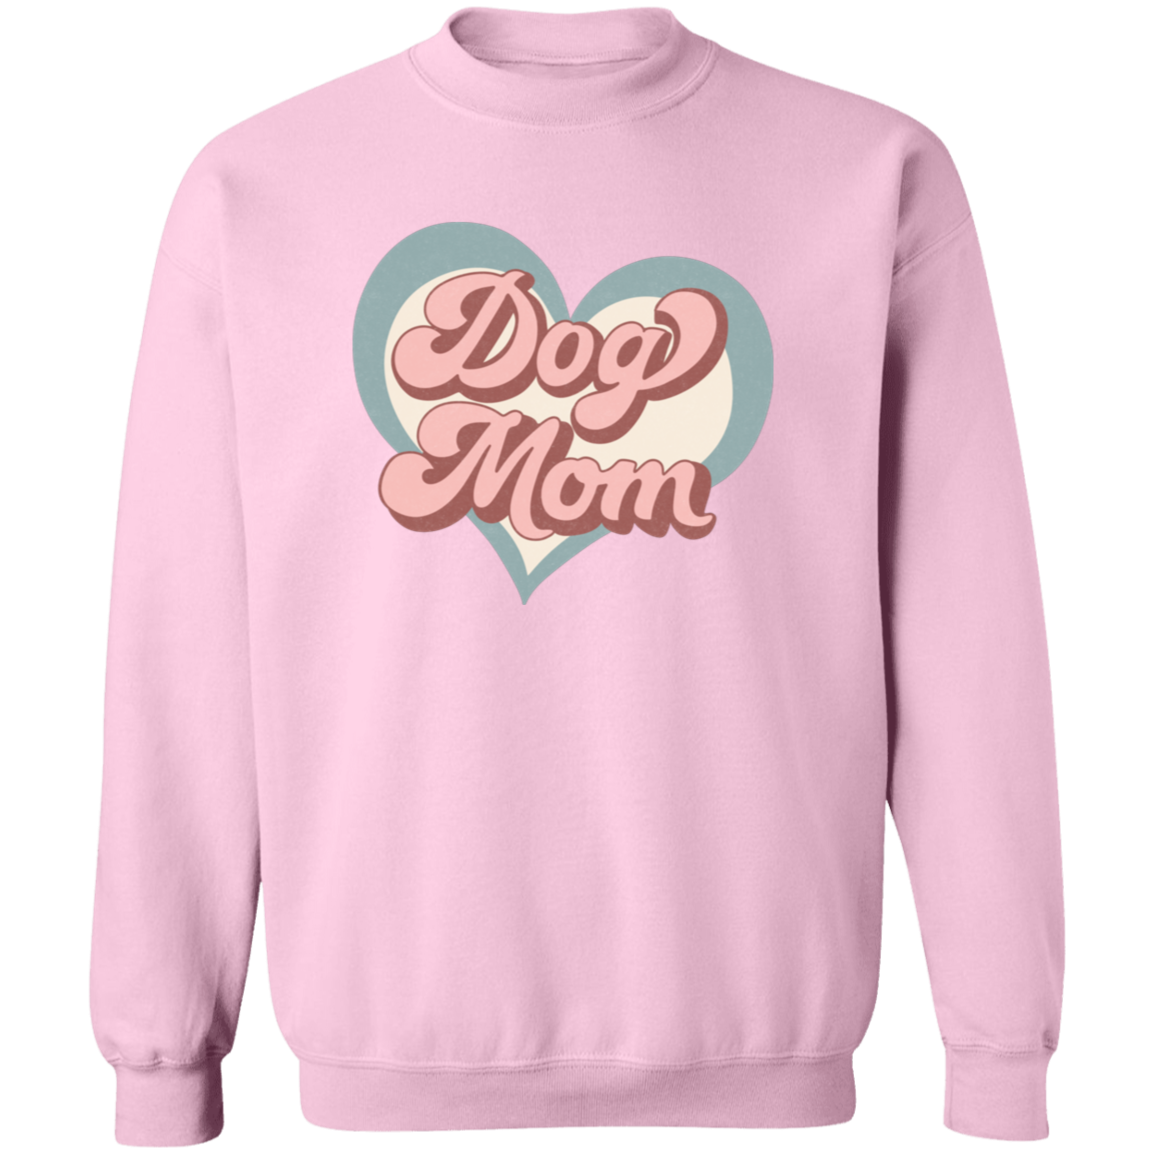 Dog Mom Retro Print with Hearts Crewneck Pullover Sweatshirt